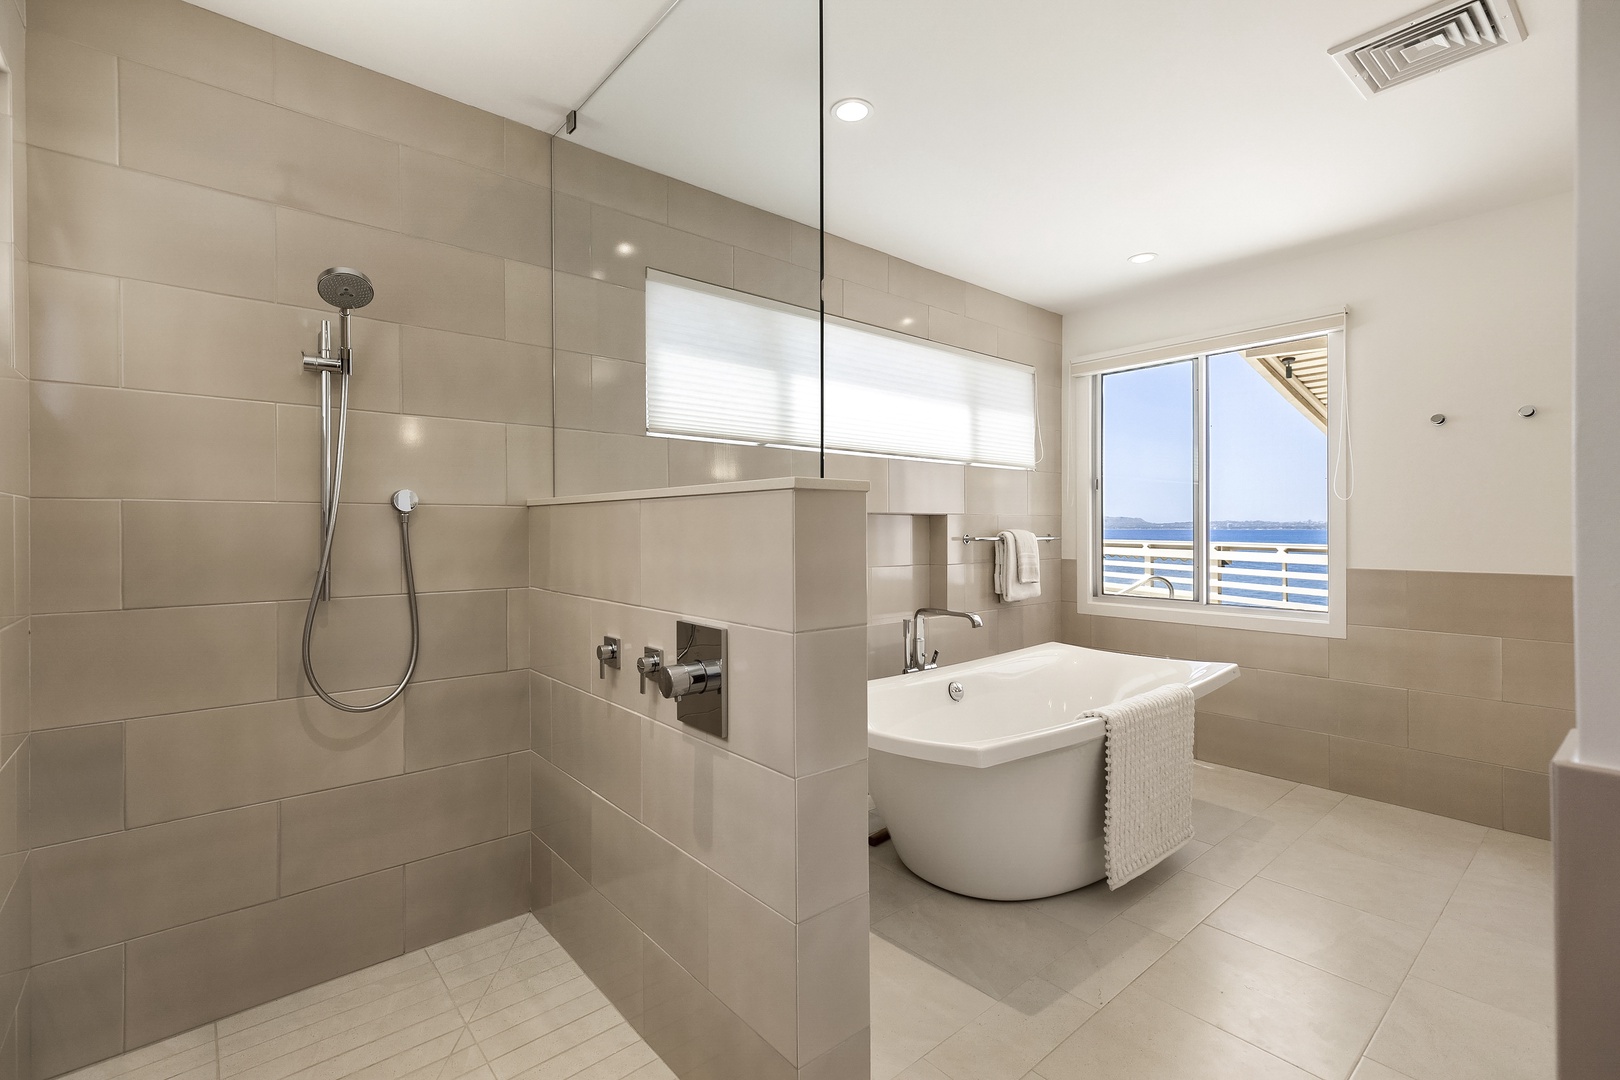 Honolulu Vacation Rentals, Hanapepe House - Primary Bathroom Tub and Shower Views